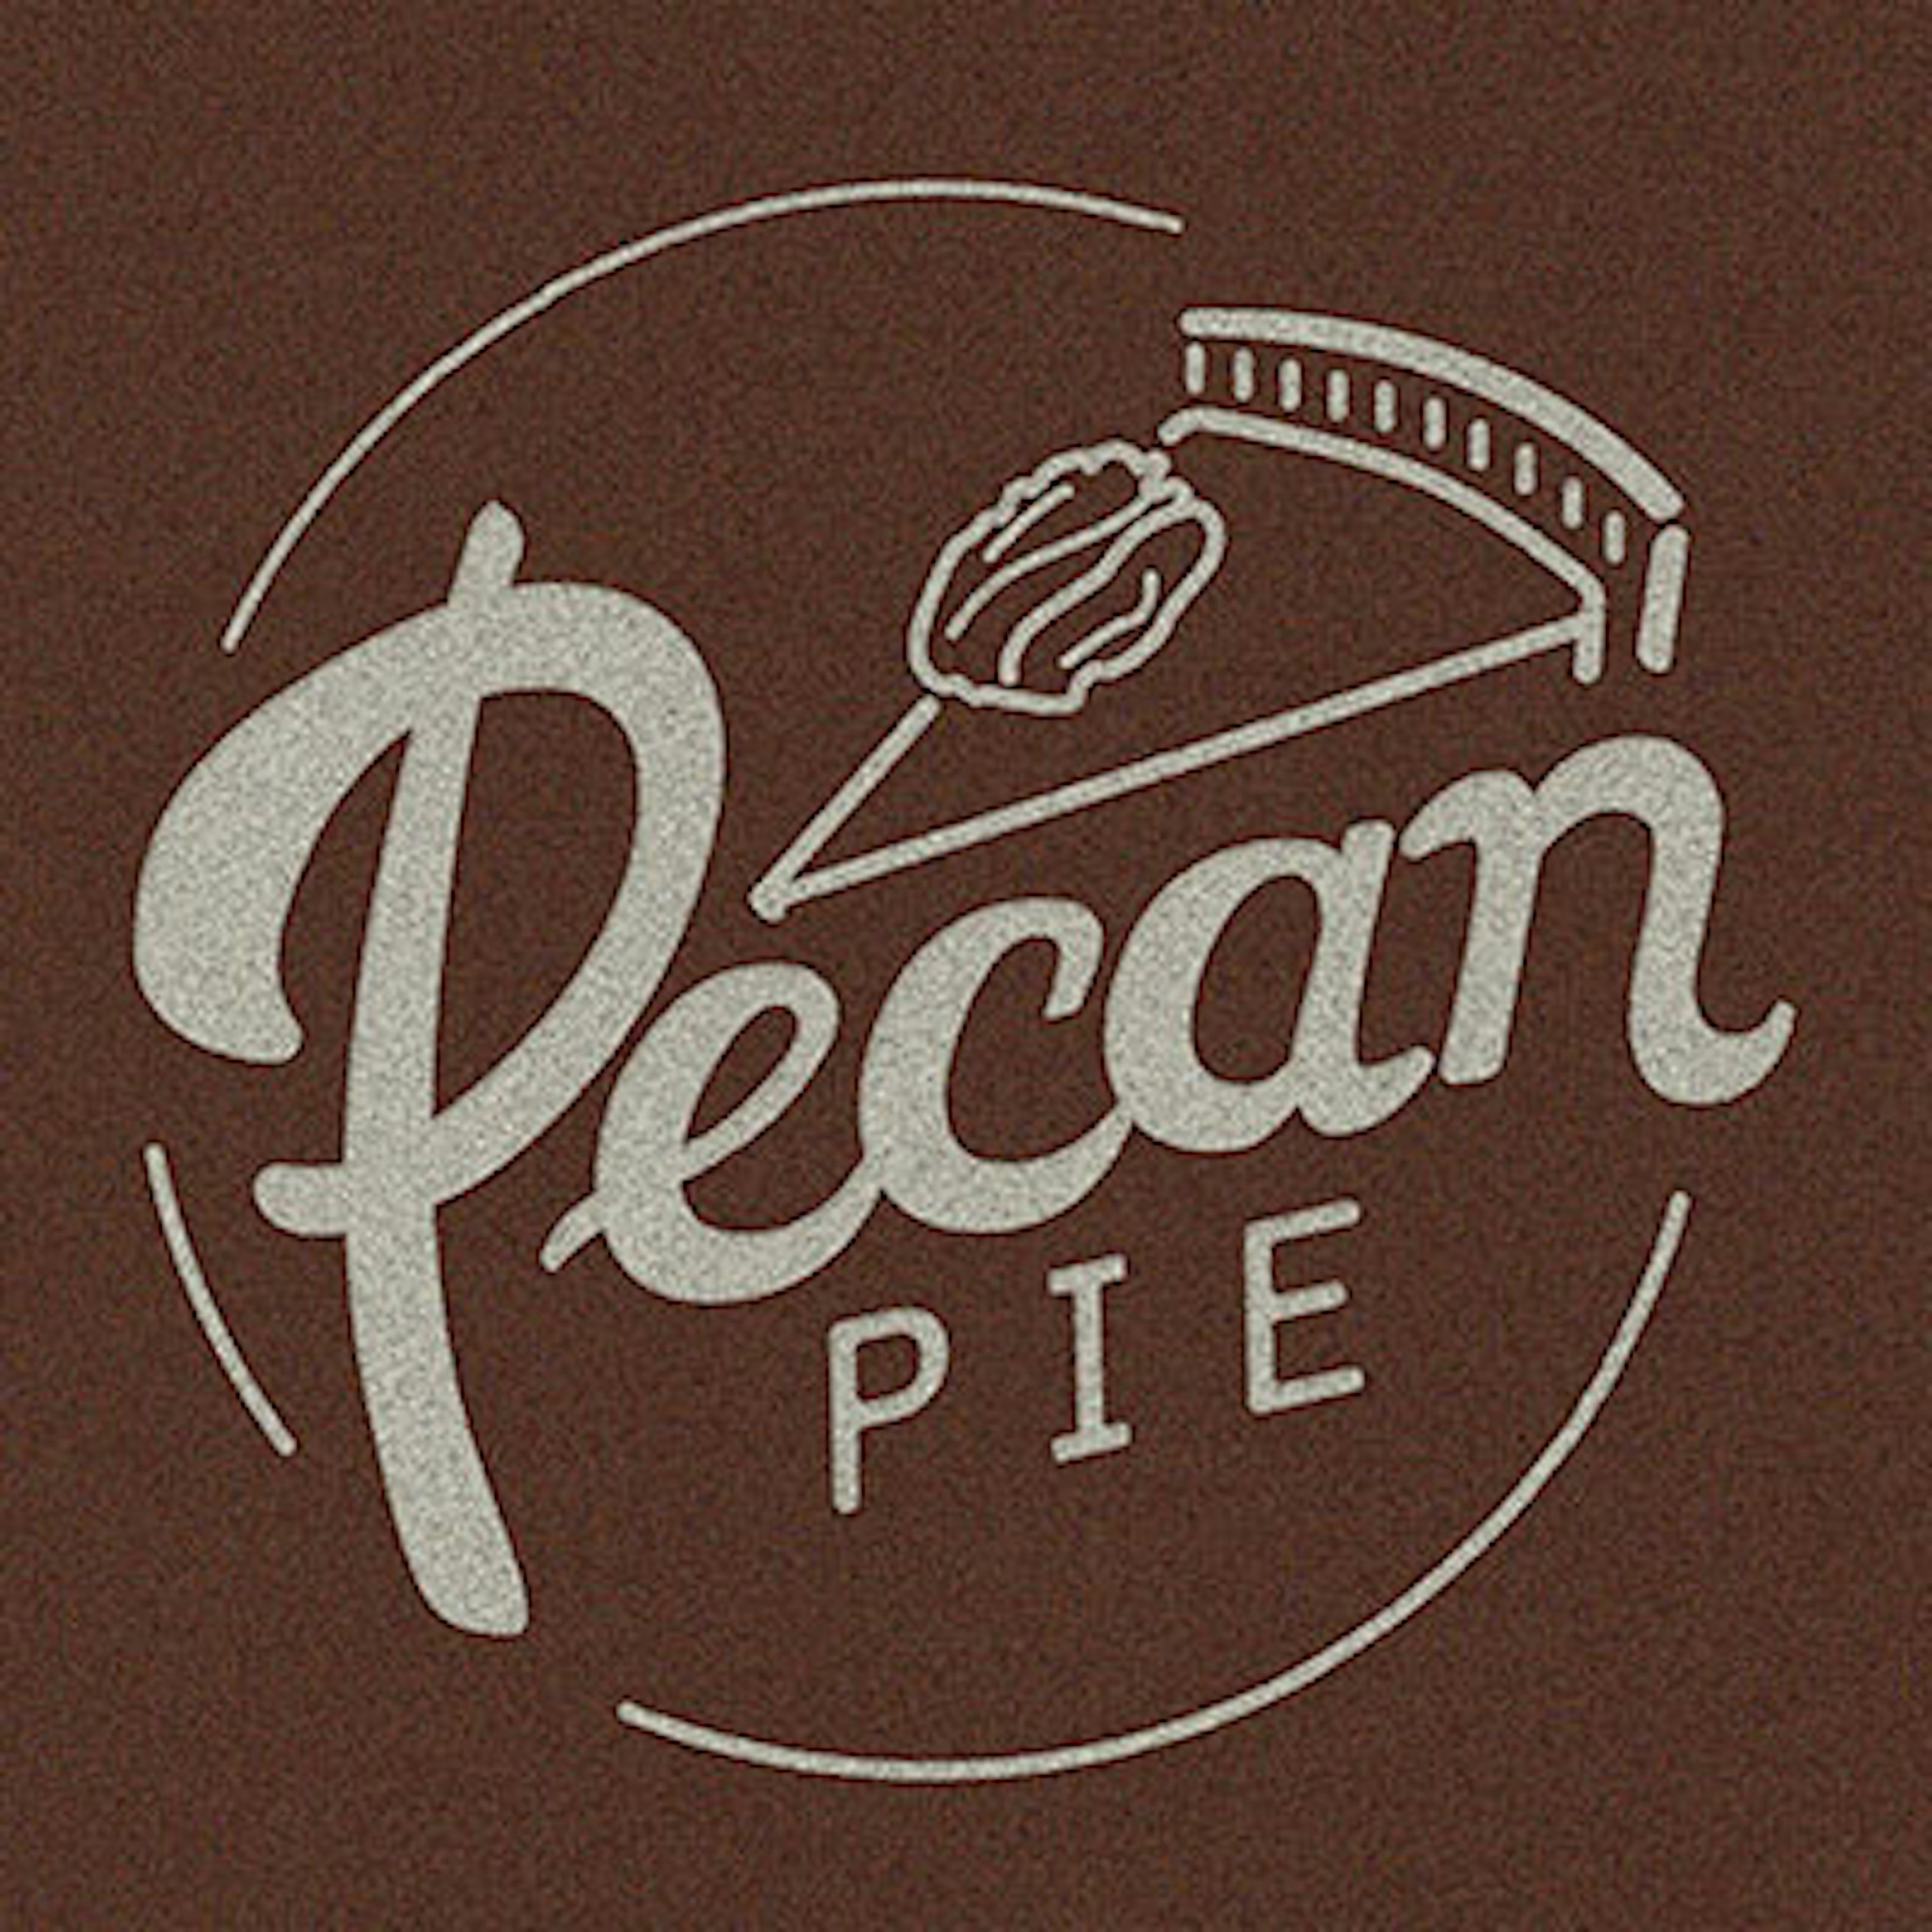 Pecan Pie artwork